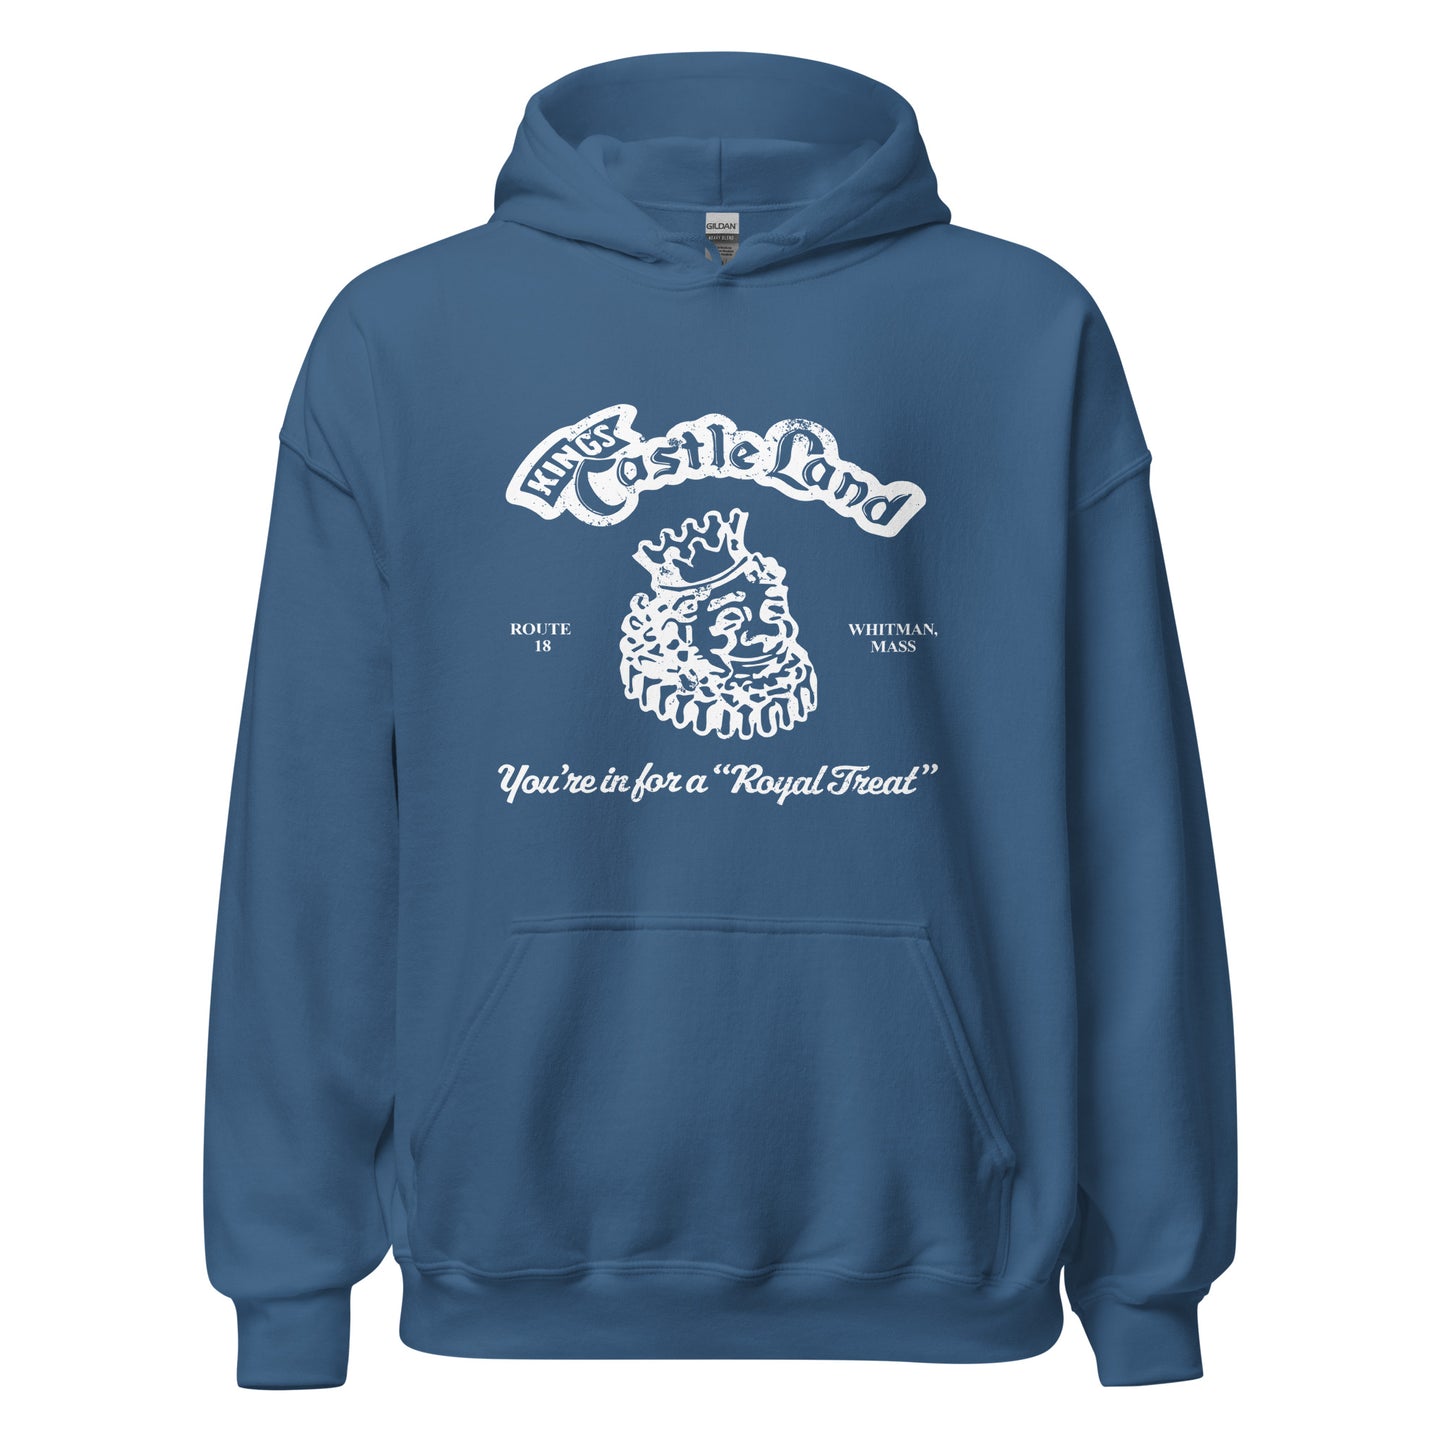 King's Castleland Hoodie - Whitman, MA | Vintage Amusement Park Sweatshirt